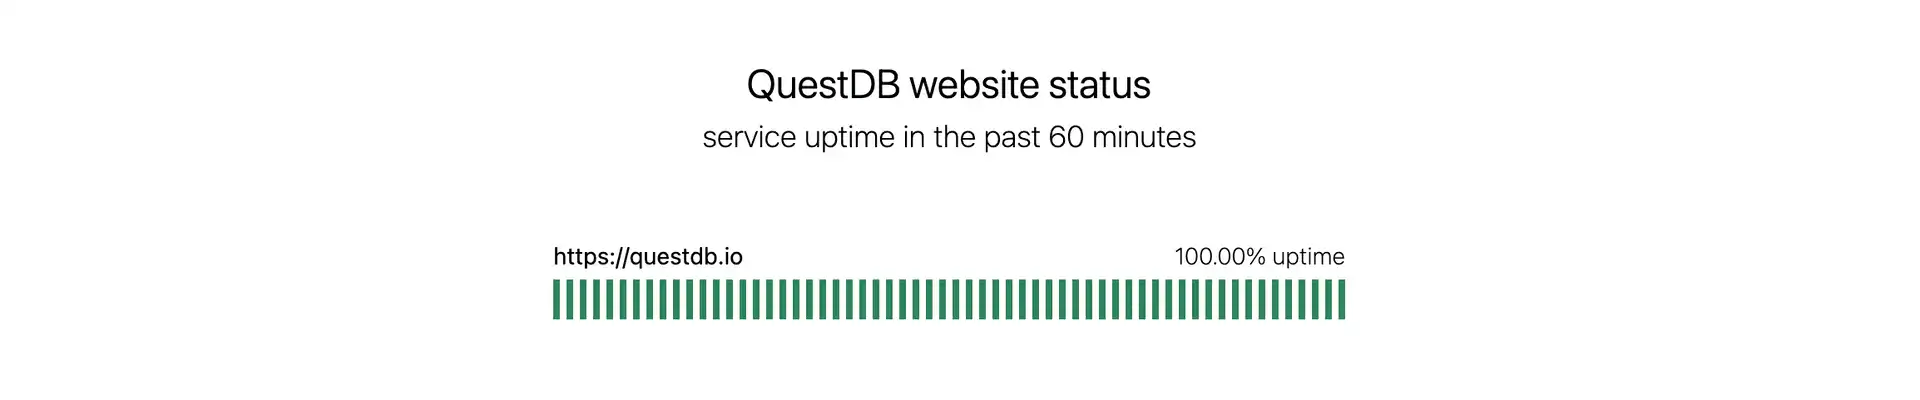 A screenshot of a QuestDB website status indicator showing 100% uptime